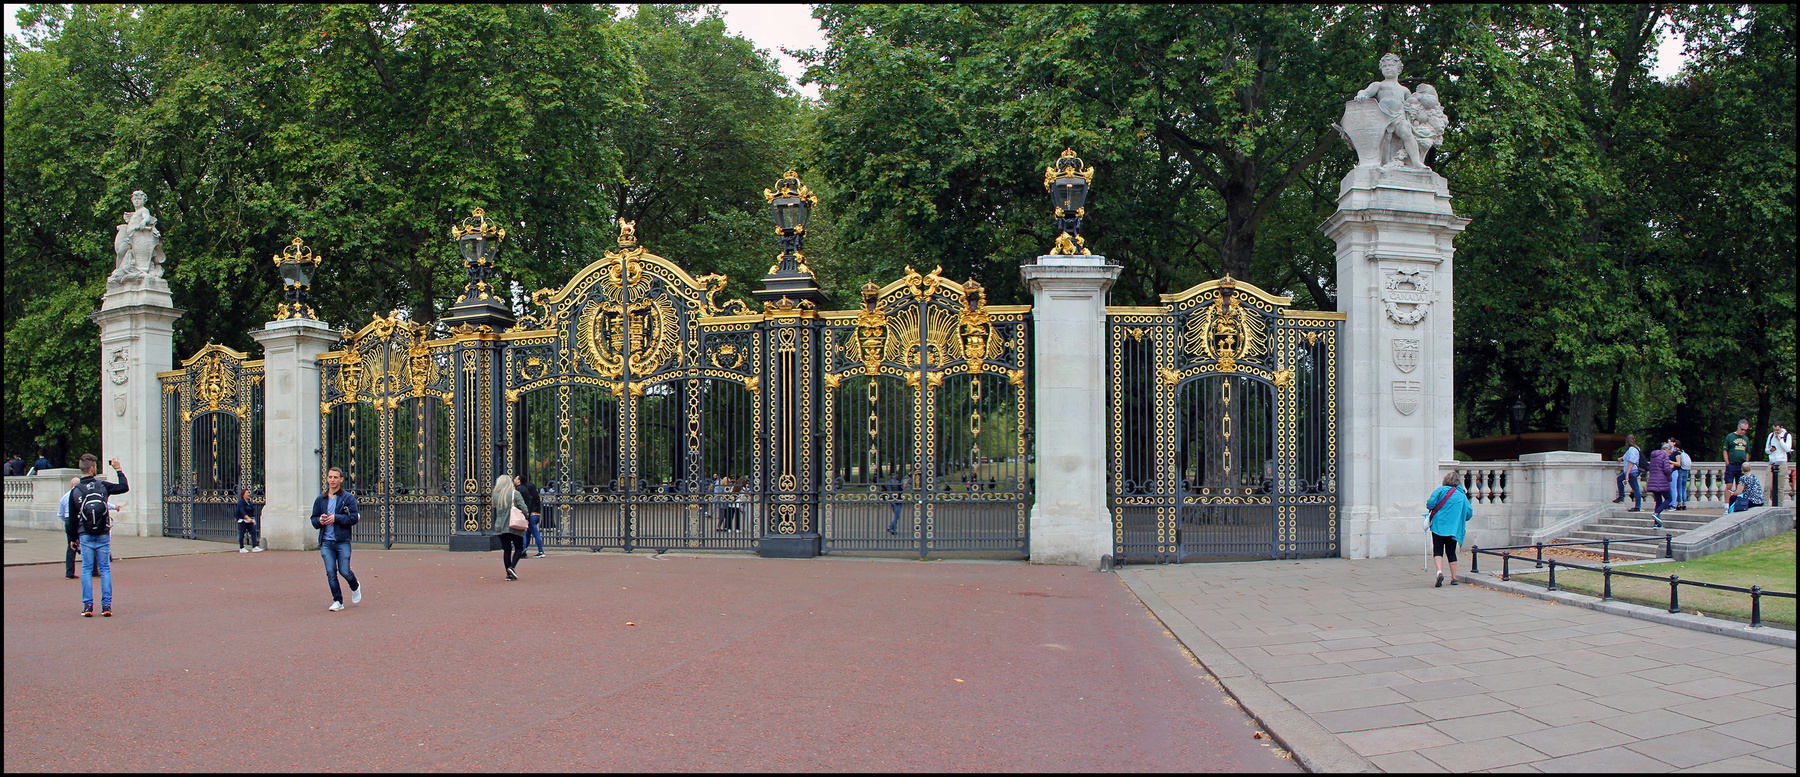 Лондон. Парк рядом с Букингемским дворецом. Лондон Букинге мский дворец Площадь Резиденция королевы Сад Ворота парка